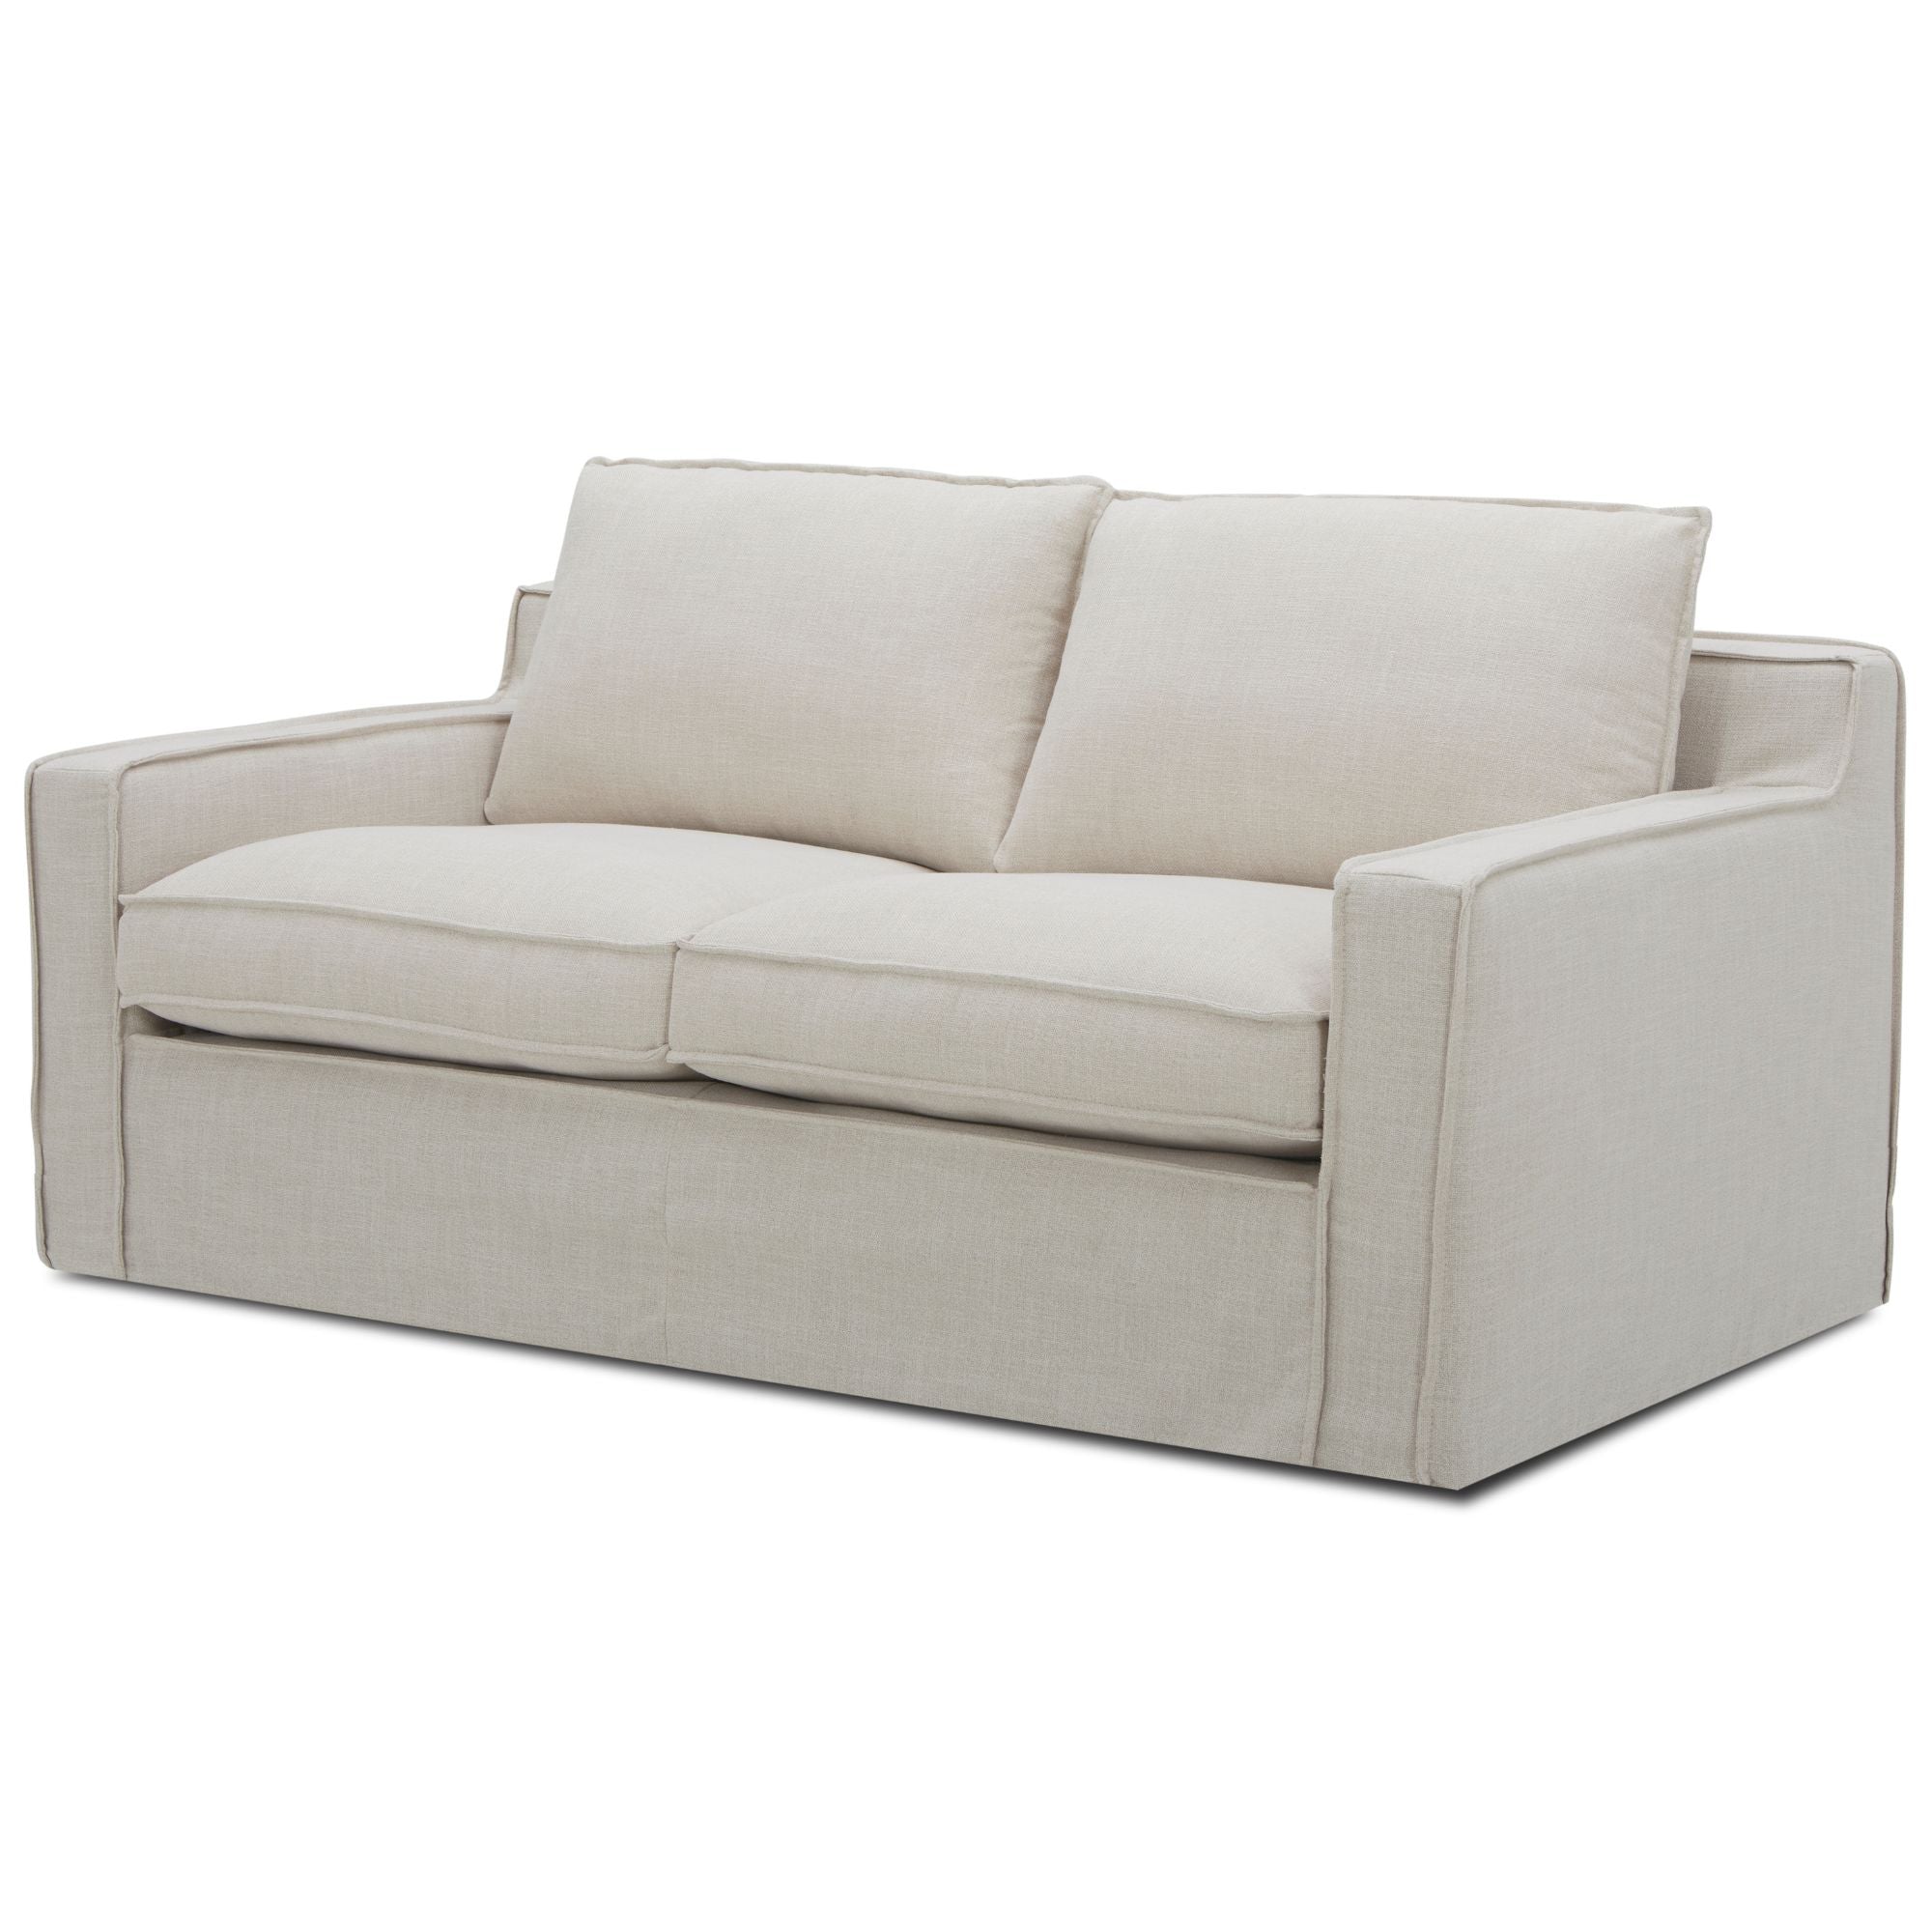 Plushy 2 Seater Sofa Fabric Uplholstered Lounge Couch - Stone